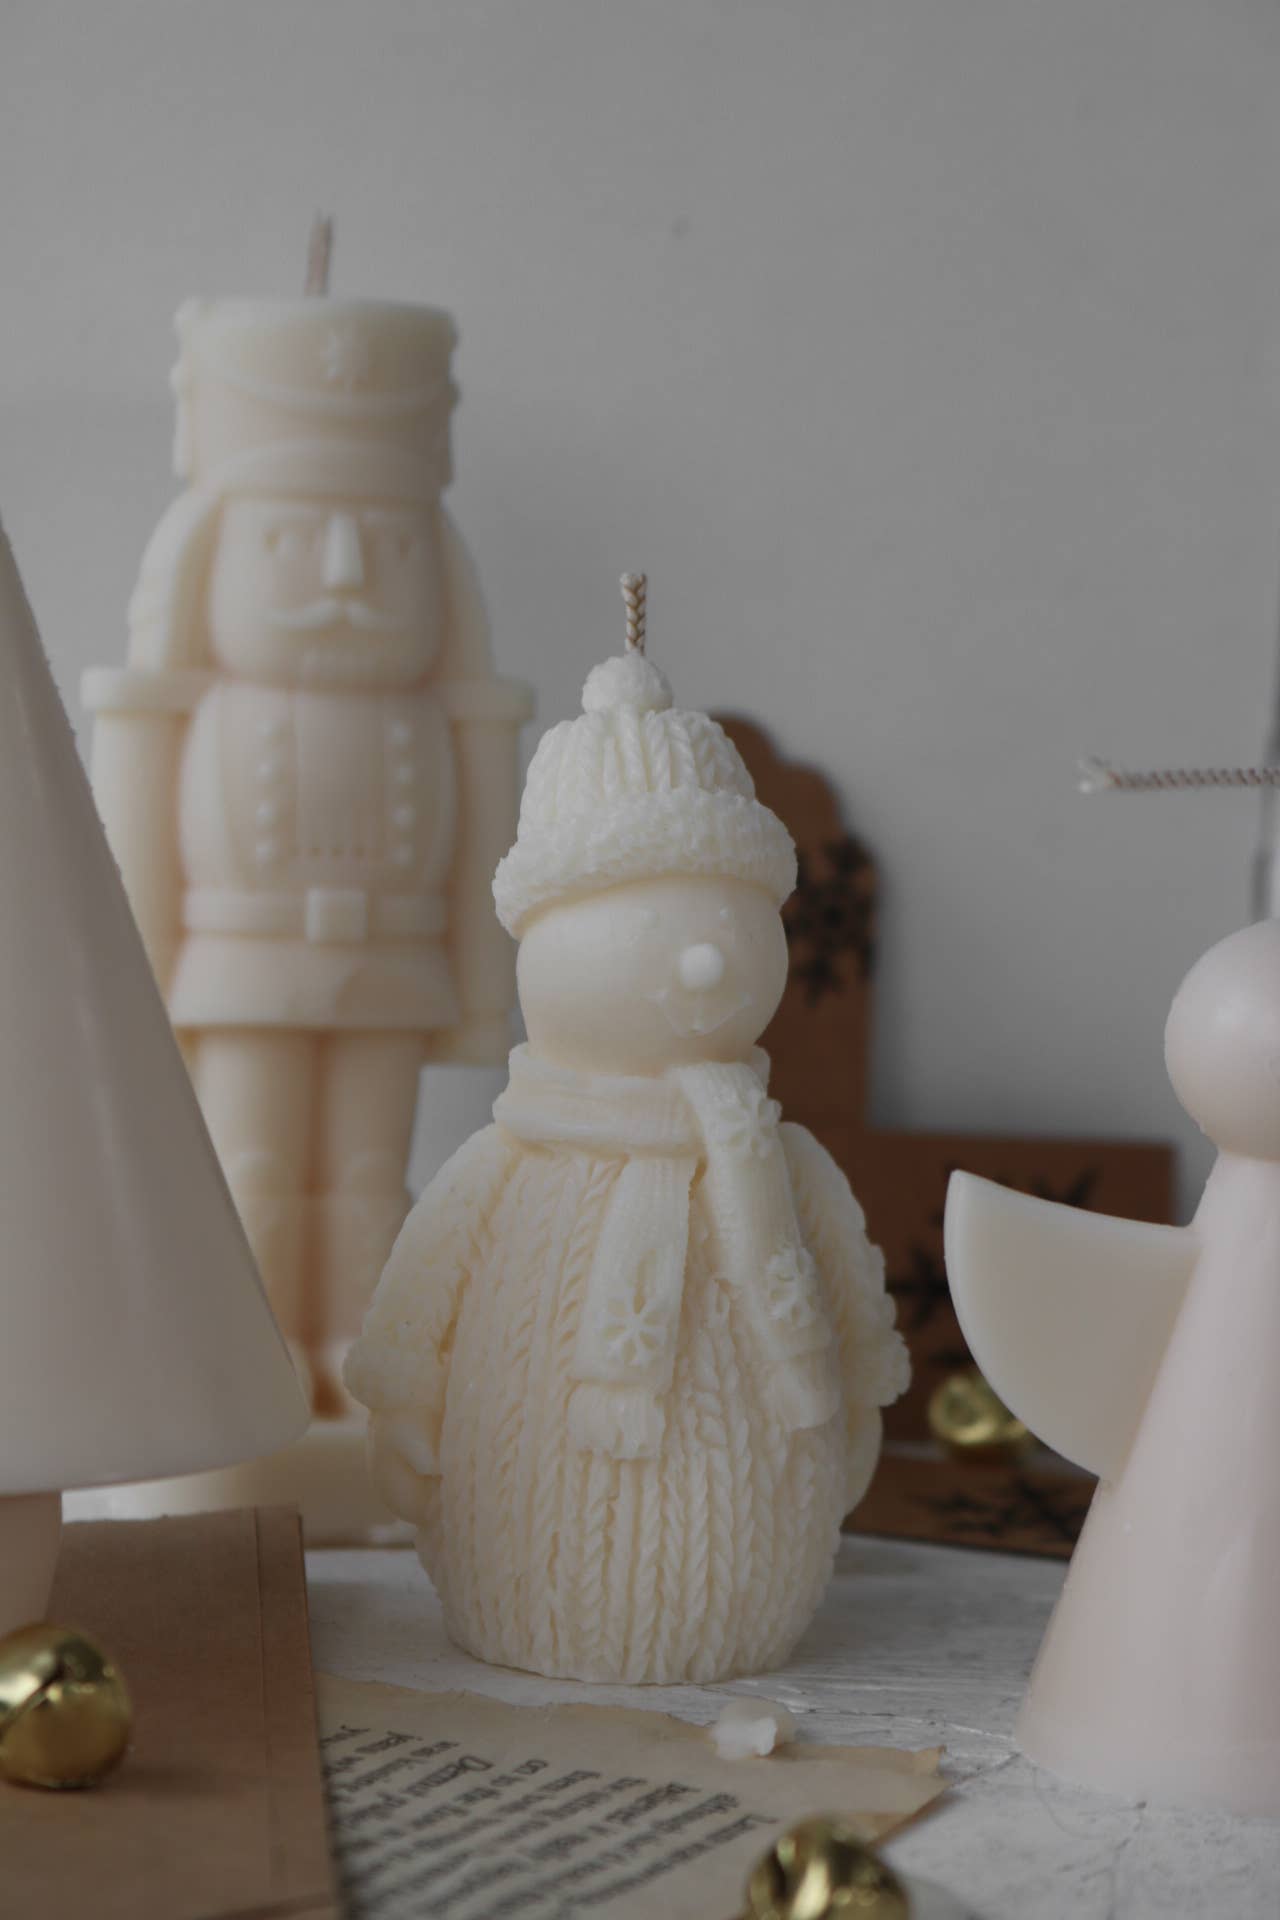 Snowman candle: Matcha